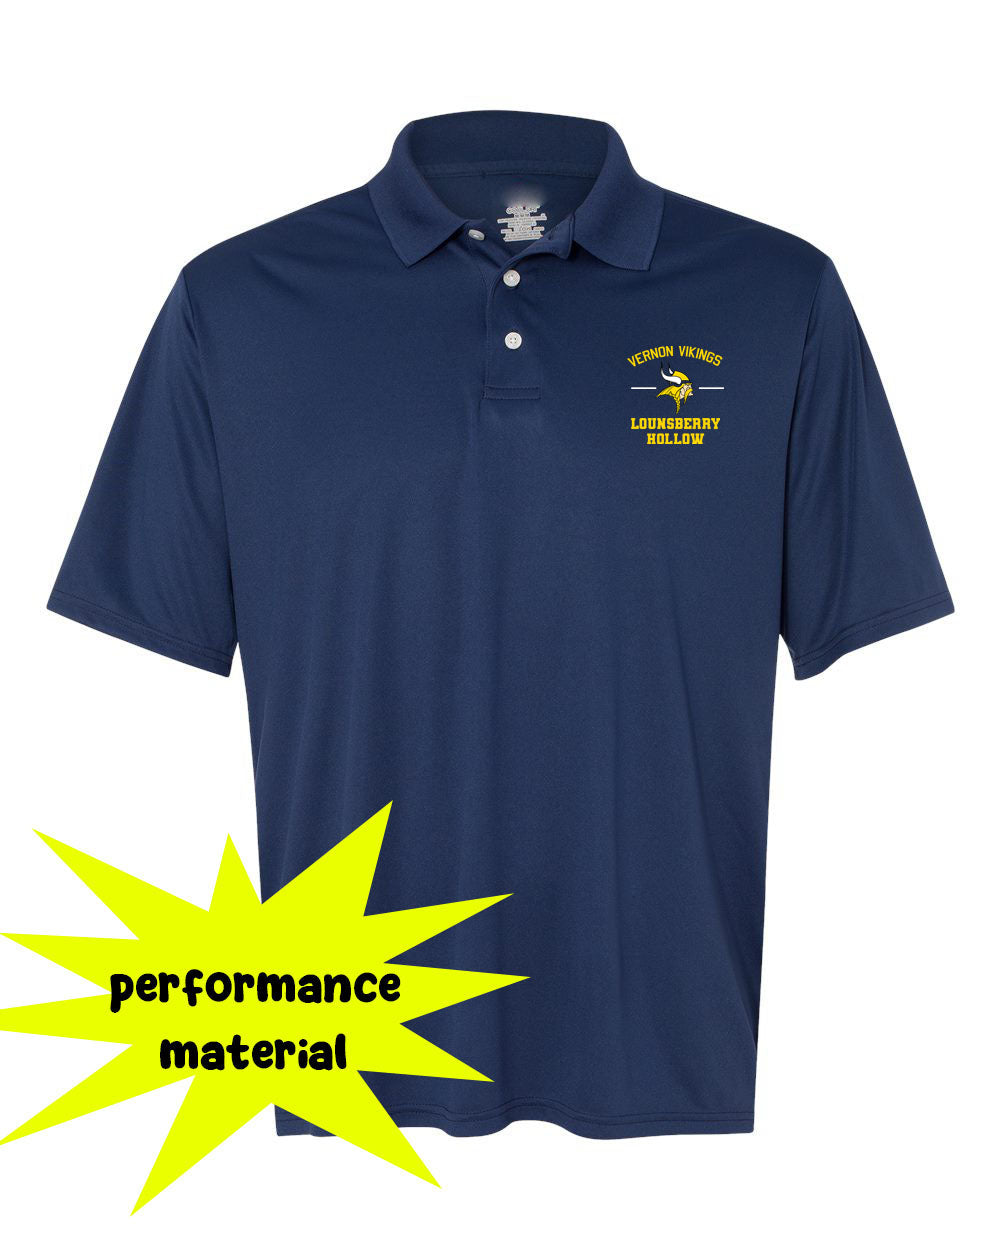 Lounsberry Hollow Design 2 Performance Material Polo T-Shirt